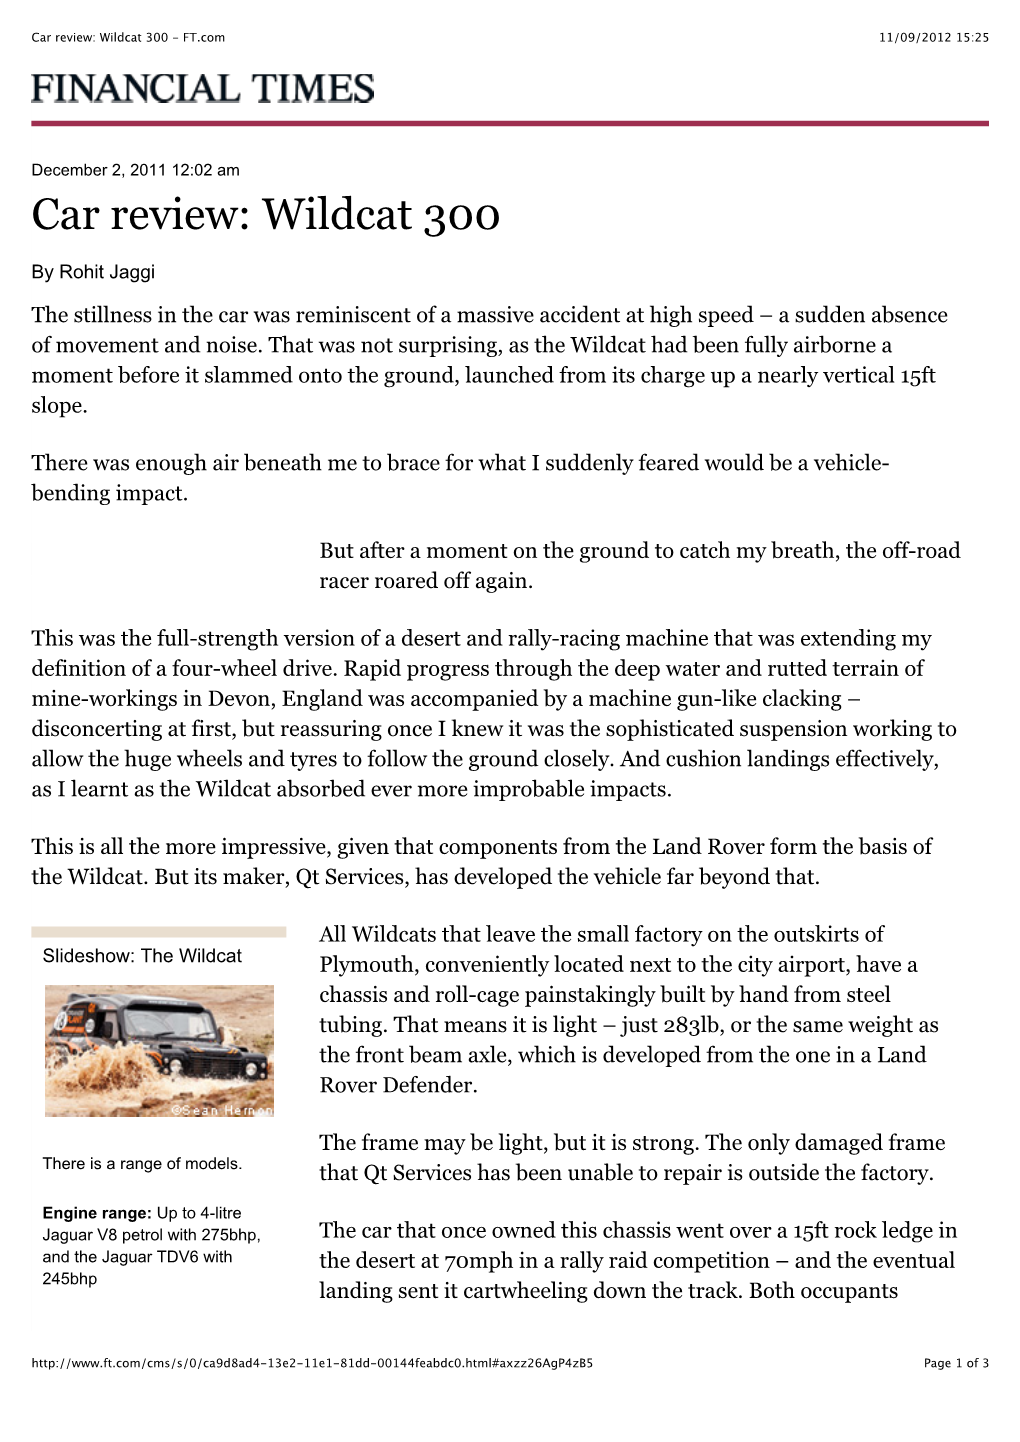 Car Review: Wildcat 300 - FT.Com 11/09/2012 15:25